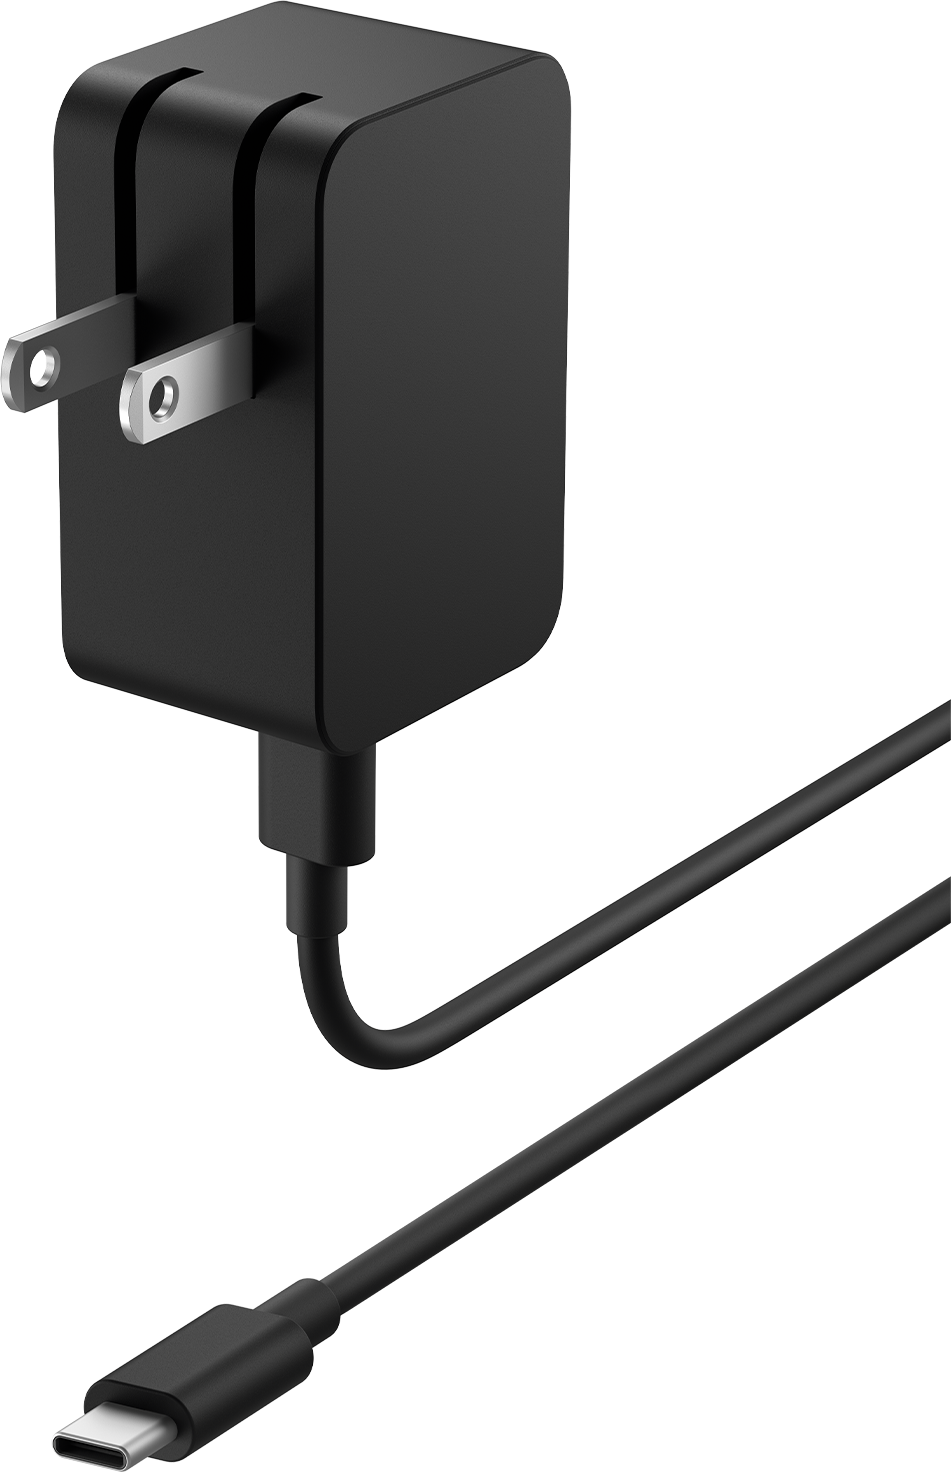 Surface 23W USB-C Power Supply